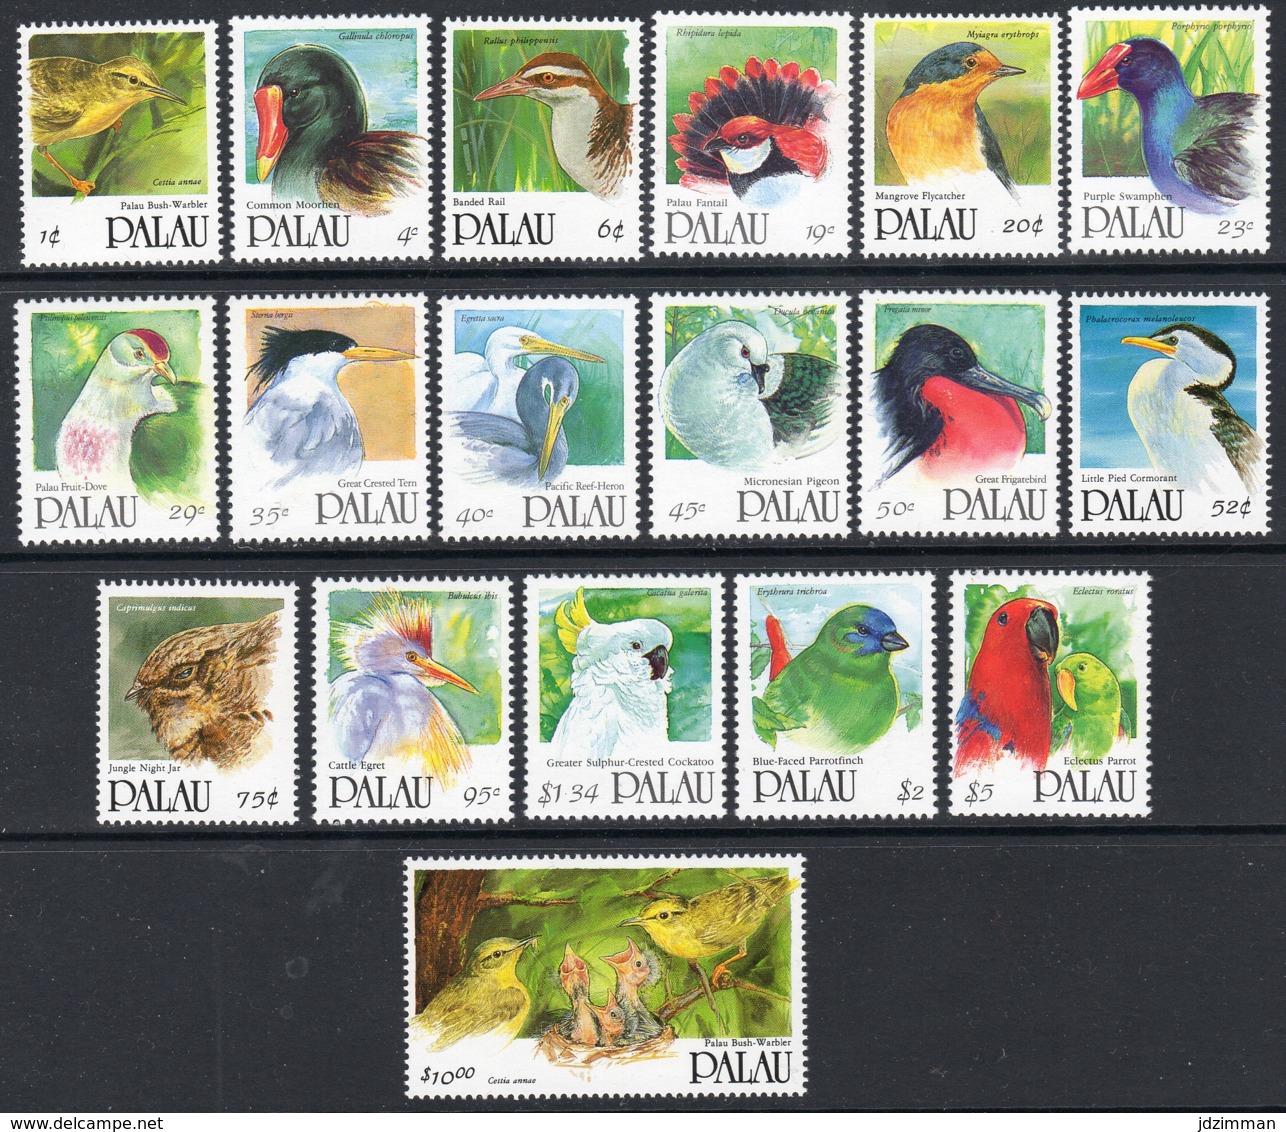 Palau, Scott 2019 No. 266-283, Issued 1991-1992, Set Of 18, MNH, Cat. $ 39.90, Birds - Palau